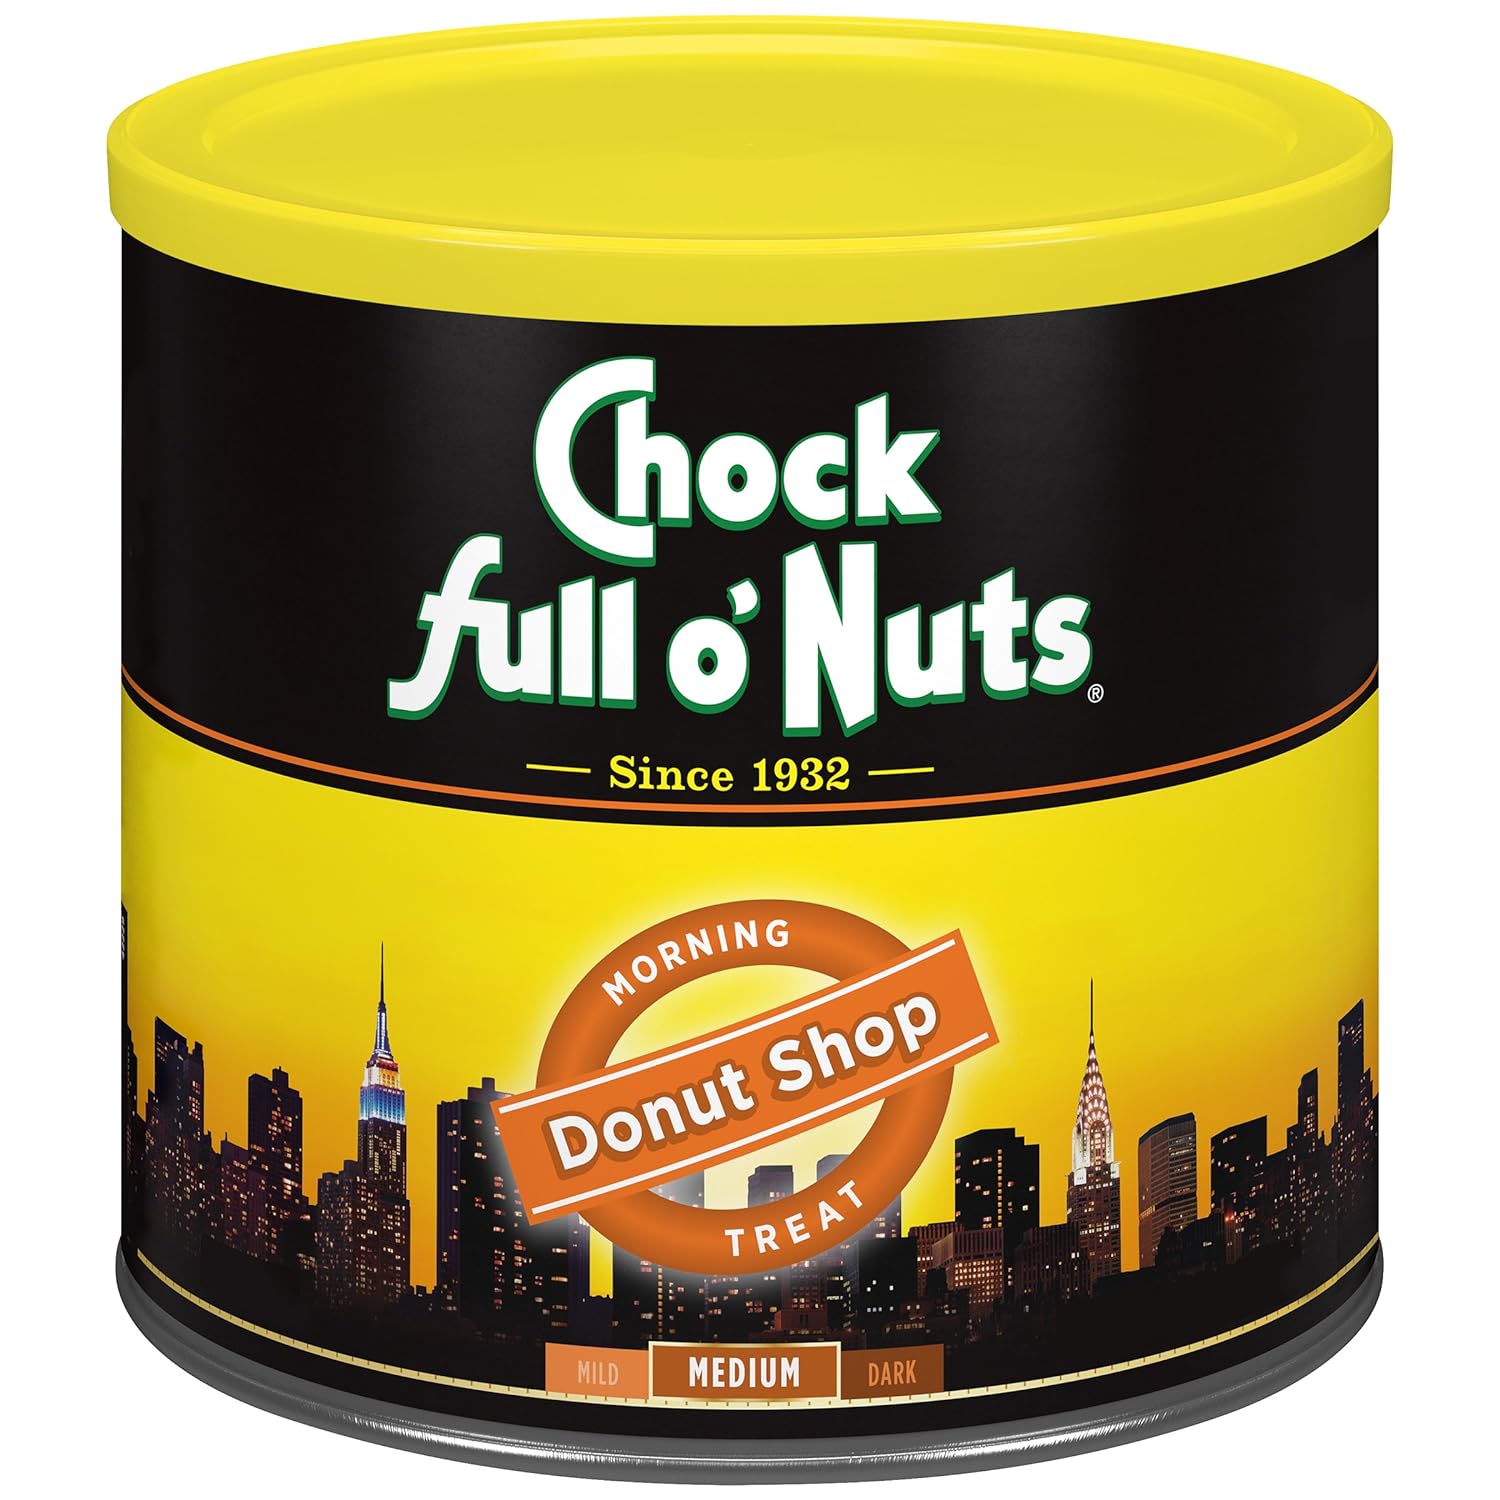 Chock Full o’Nuts Donut Shop Roast, Medium Roast Ground Coffee – Gourmet Arabica Coffee Beans – Smooth, Full-Bodied and Rich Coffee (23 Oz. Can)